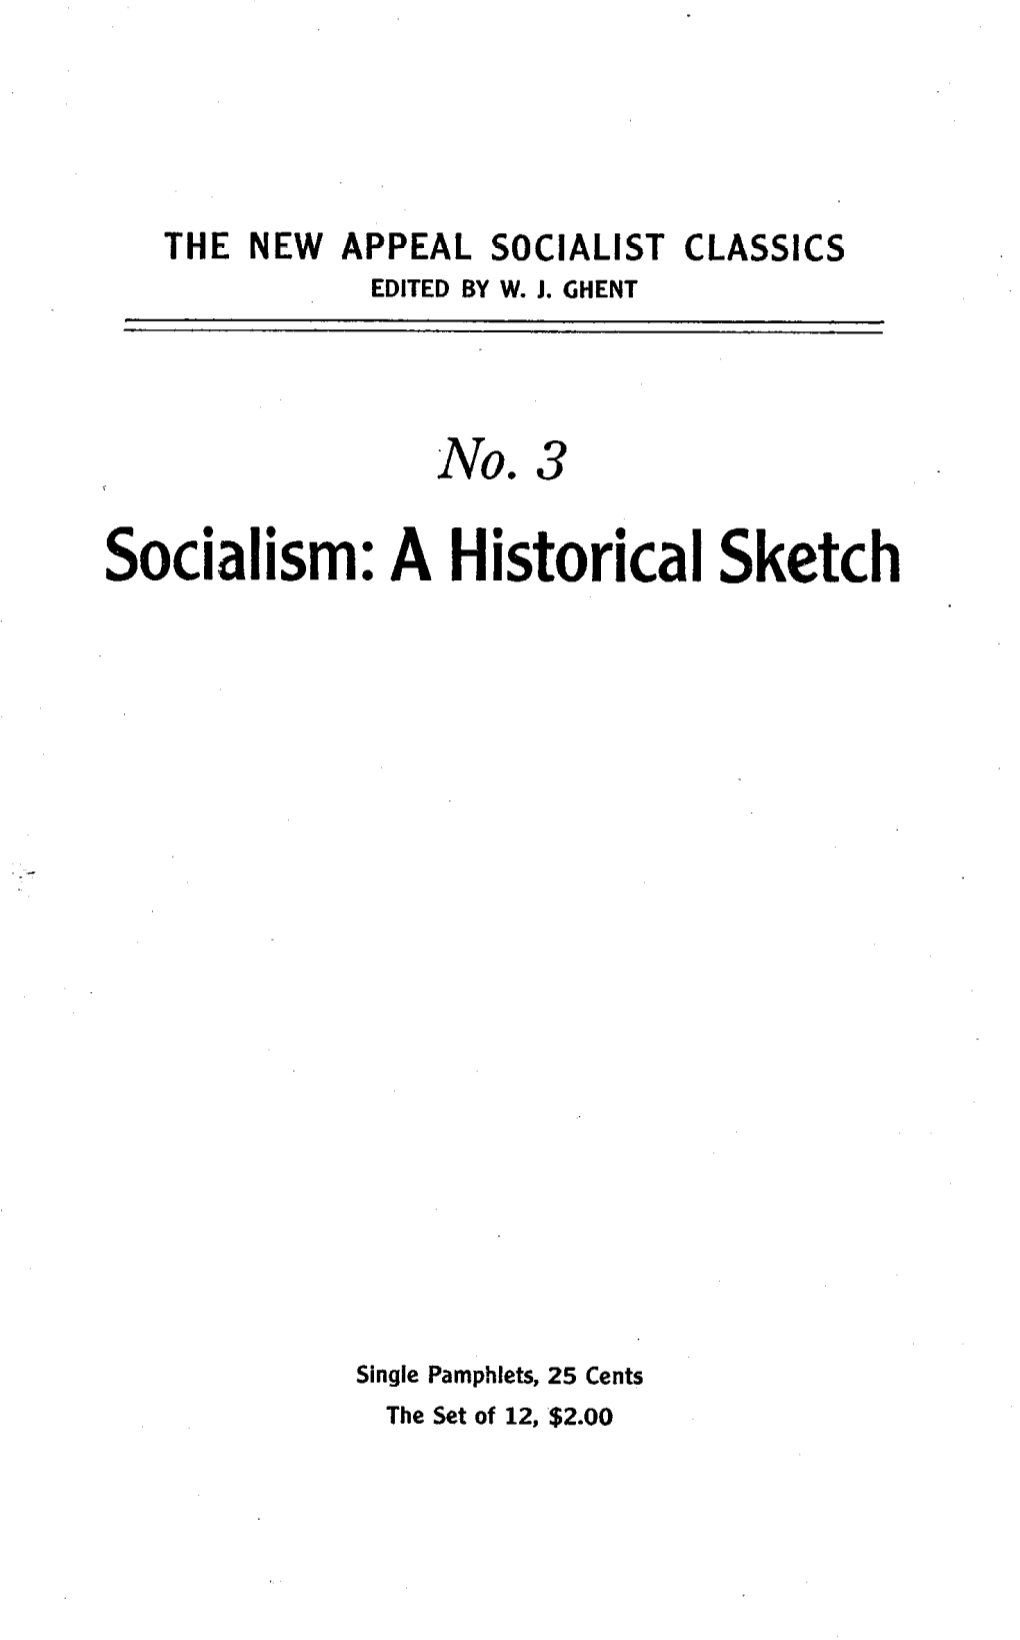 Socialism: a Historical Sketch